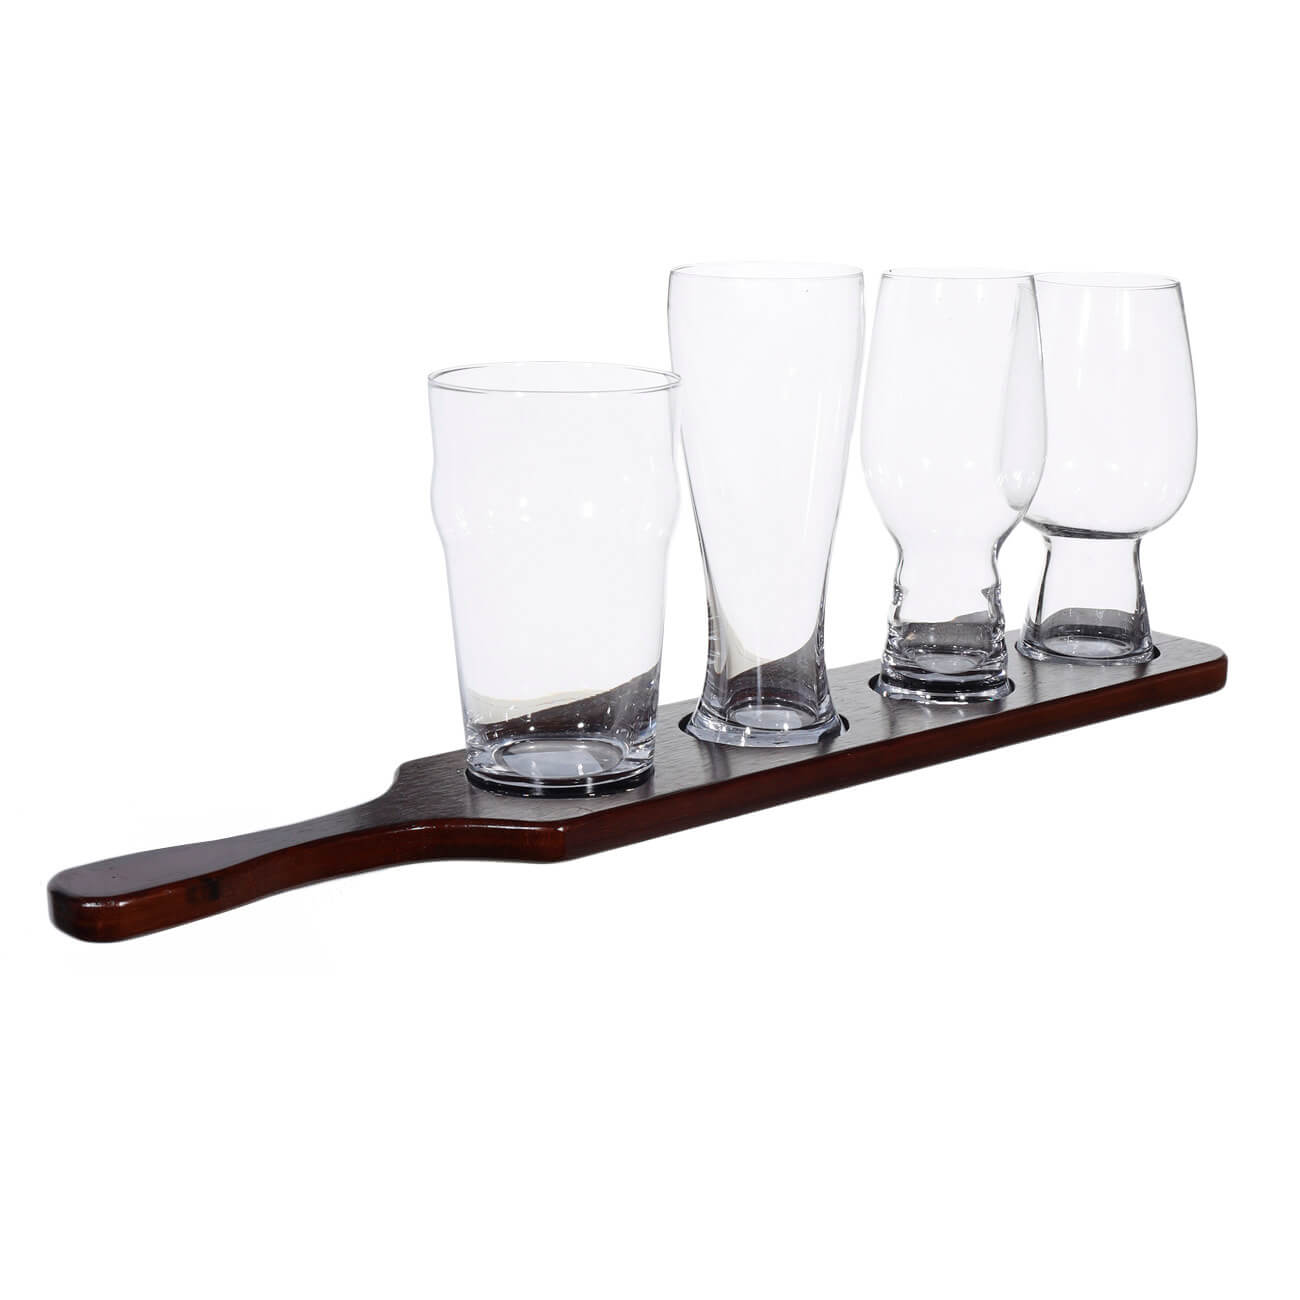 Набор стаканов для пива, 4 шт, на подставке, стекло/дерево, Noble tree набор стаканов mallony